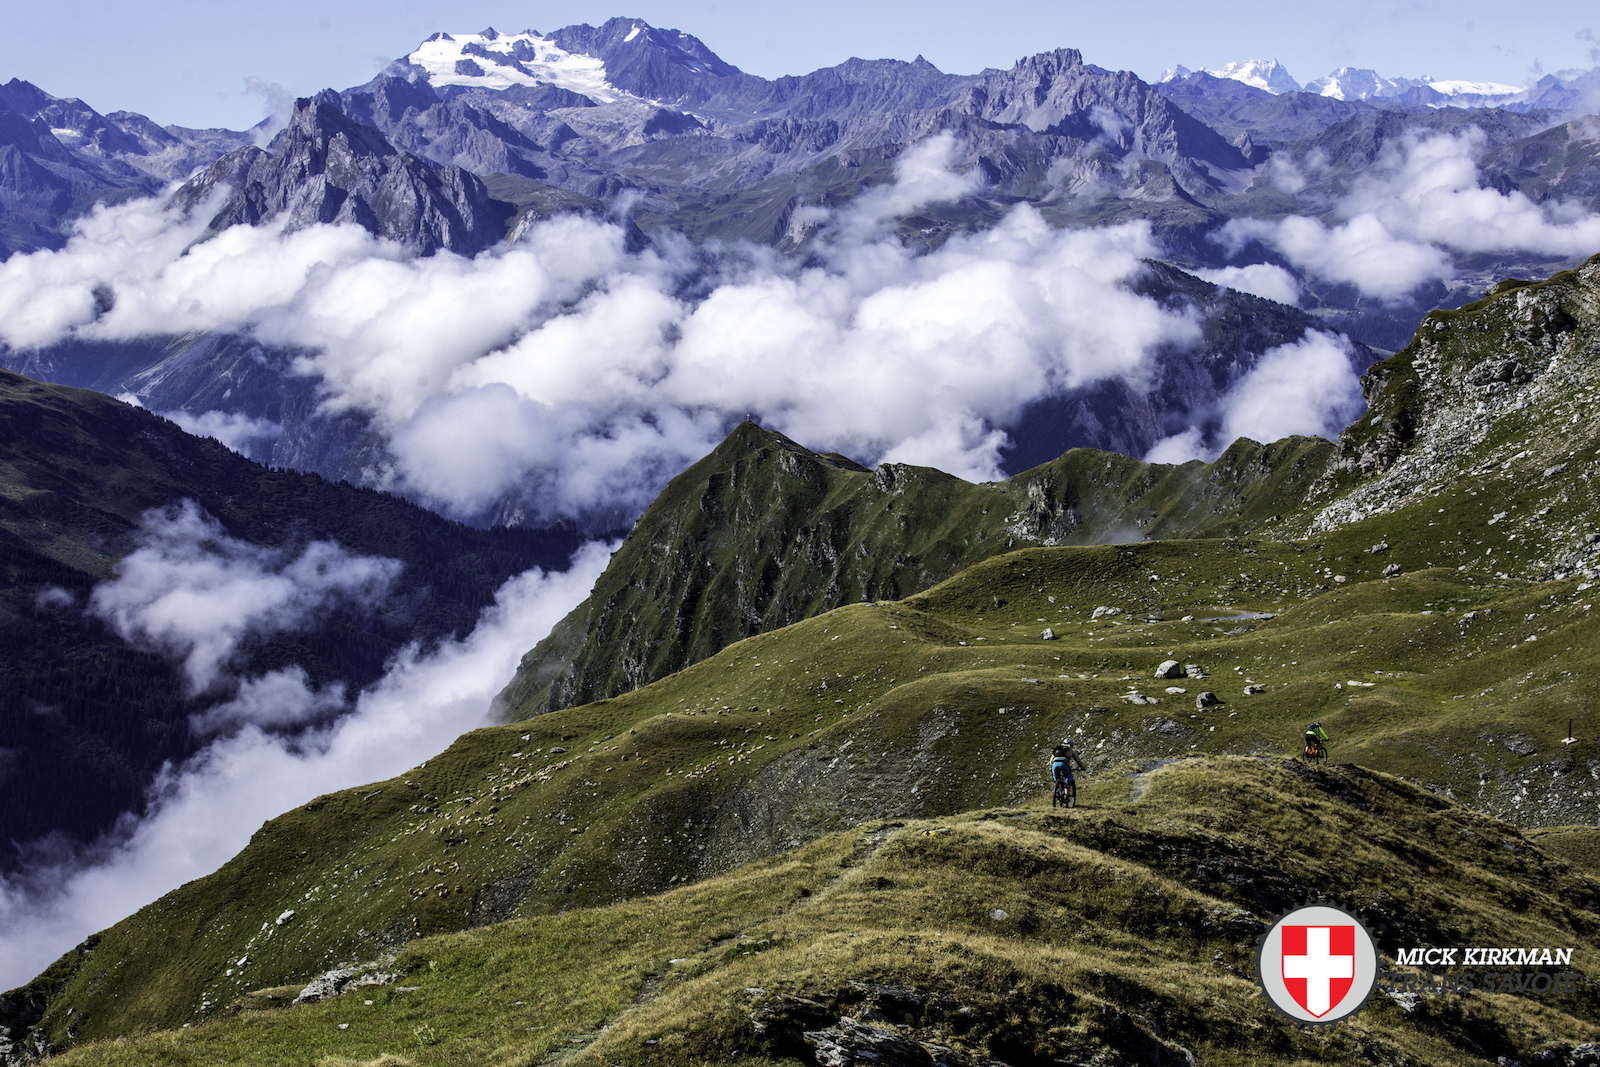 Trans-Savoie 2015 - Full 6-Day Highlights